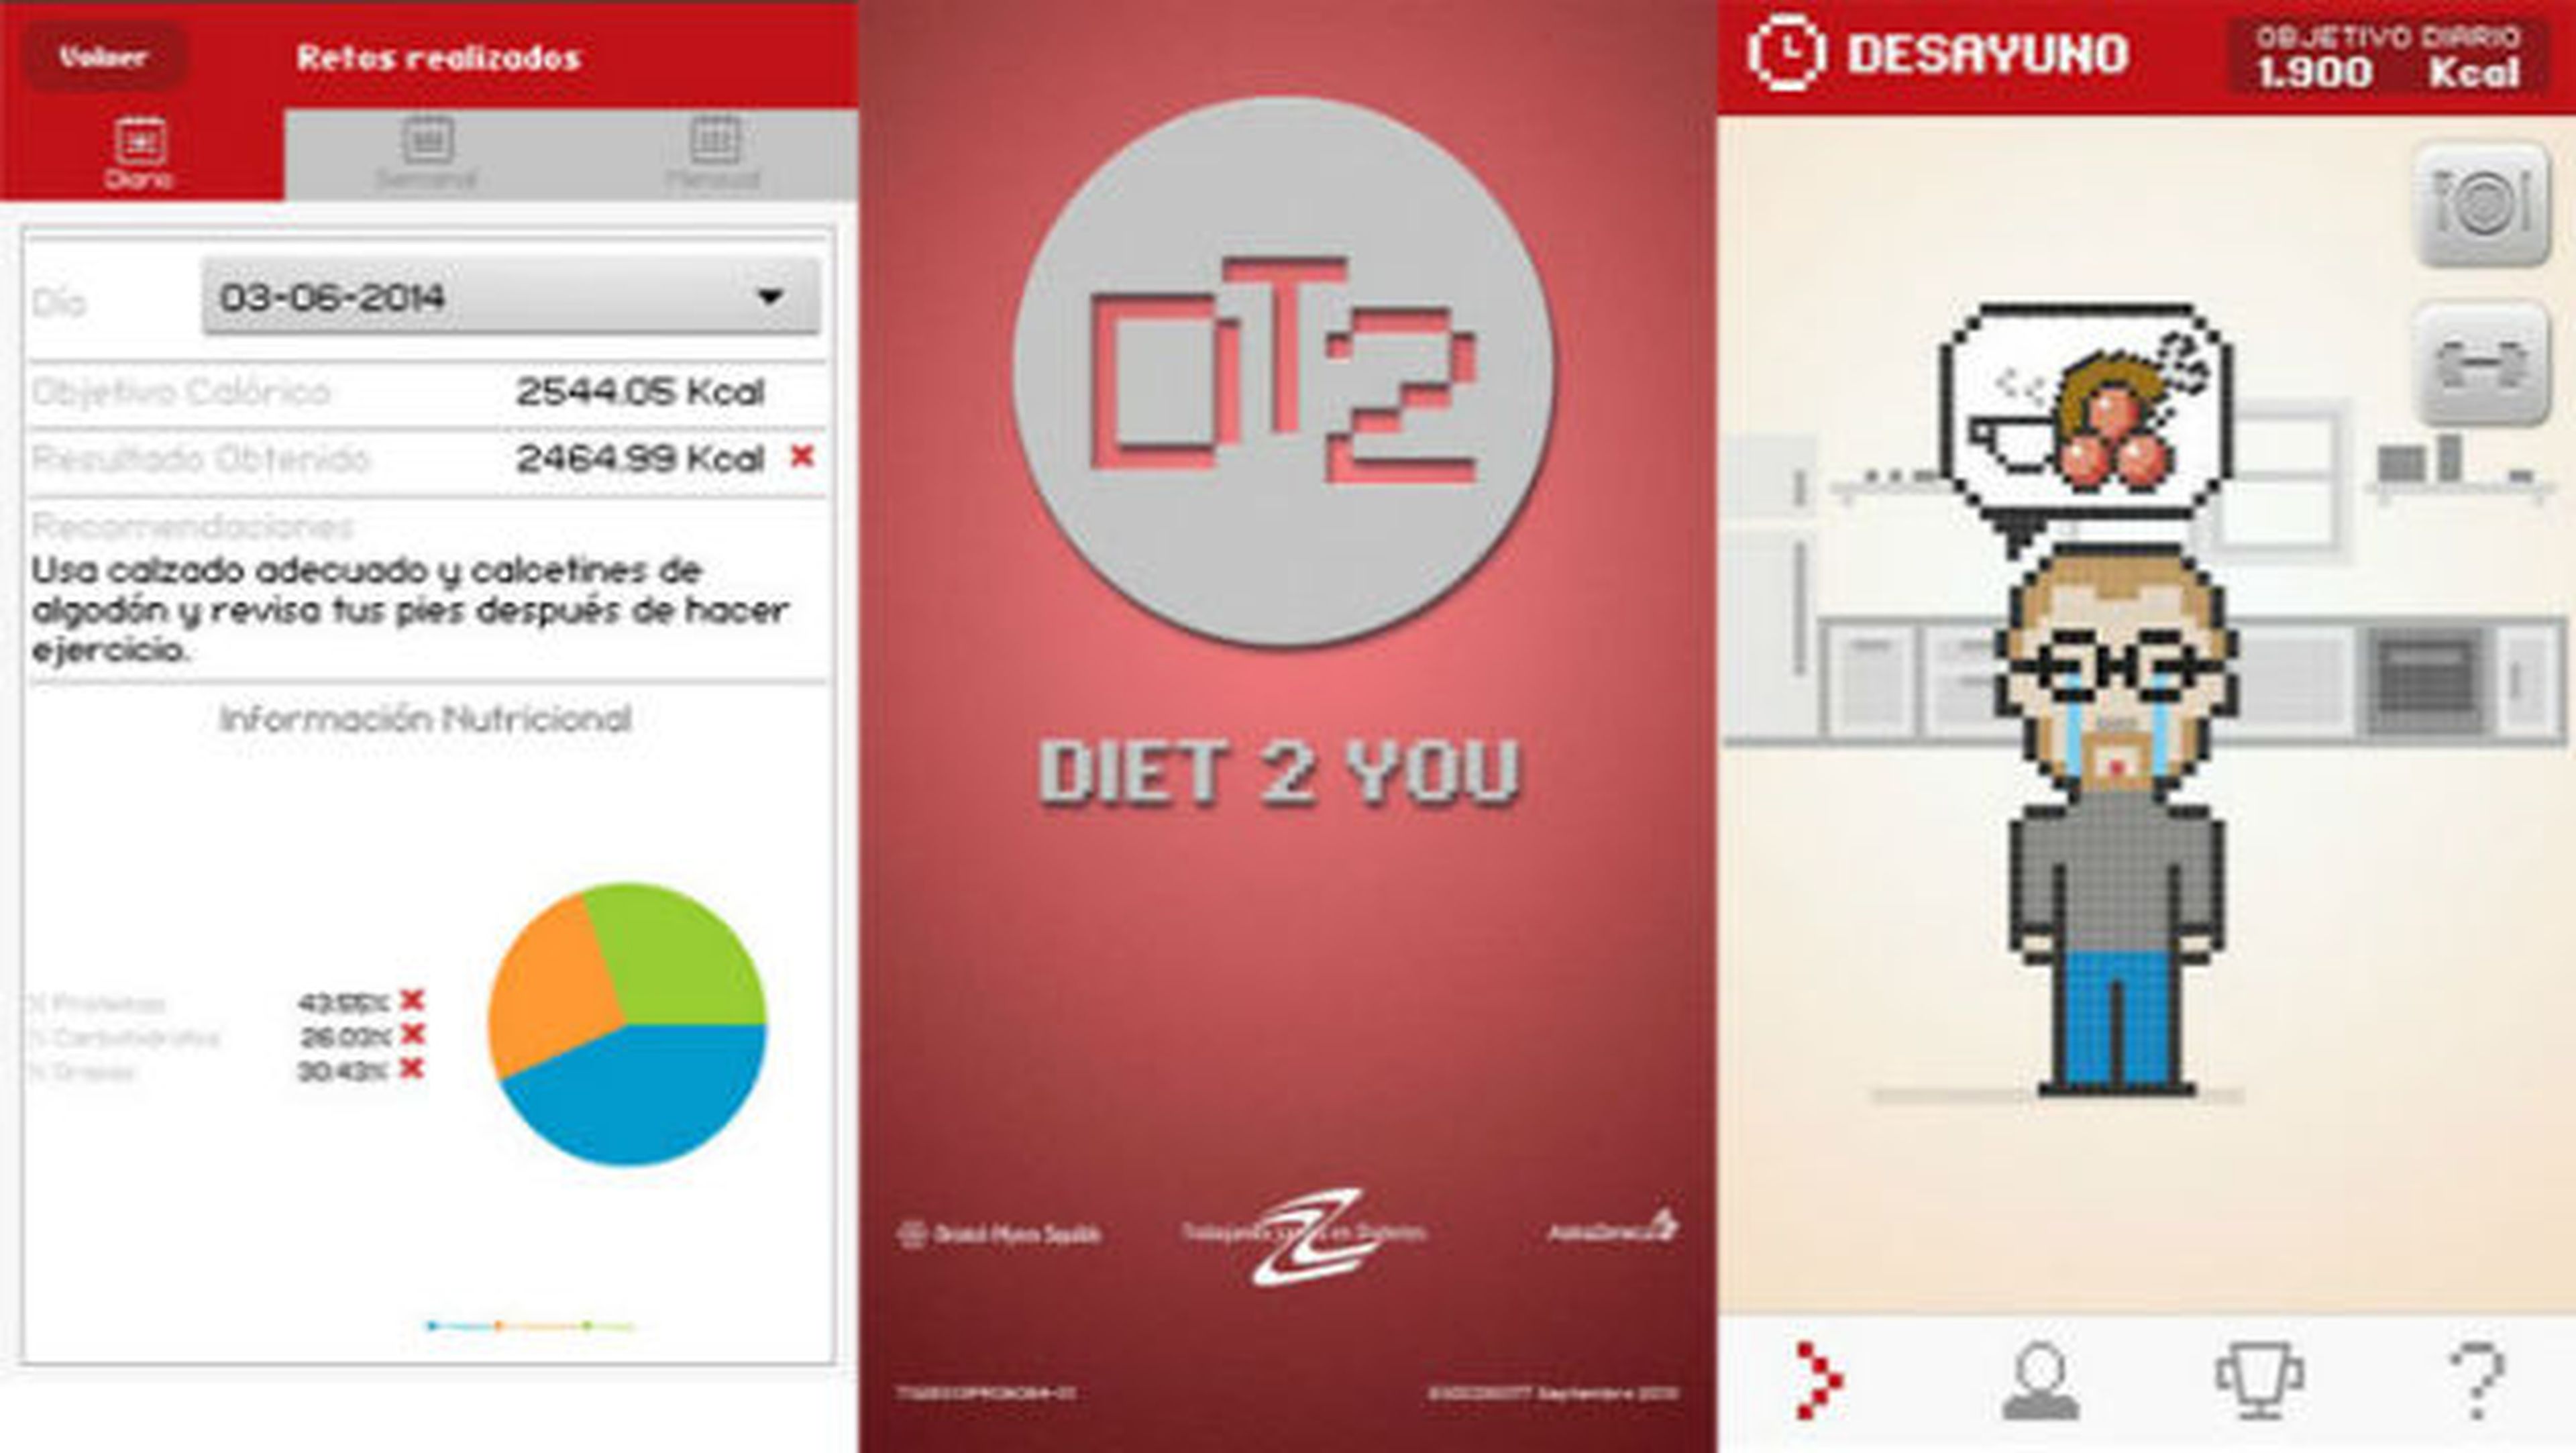 DT2, la app para controlar la diabetes